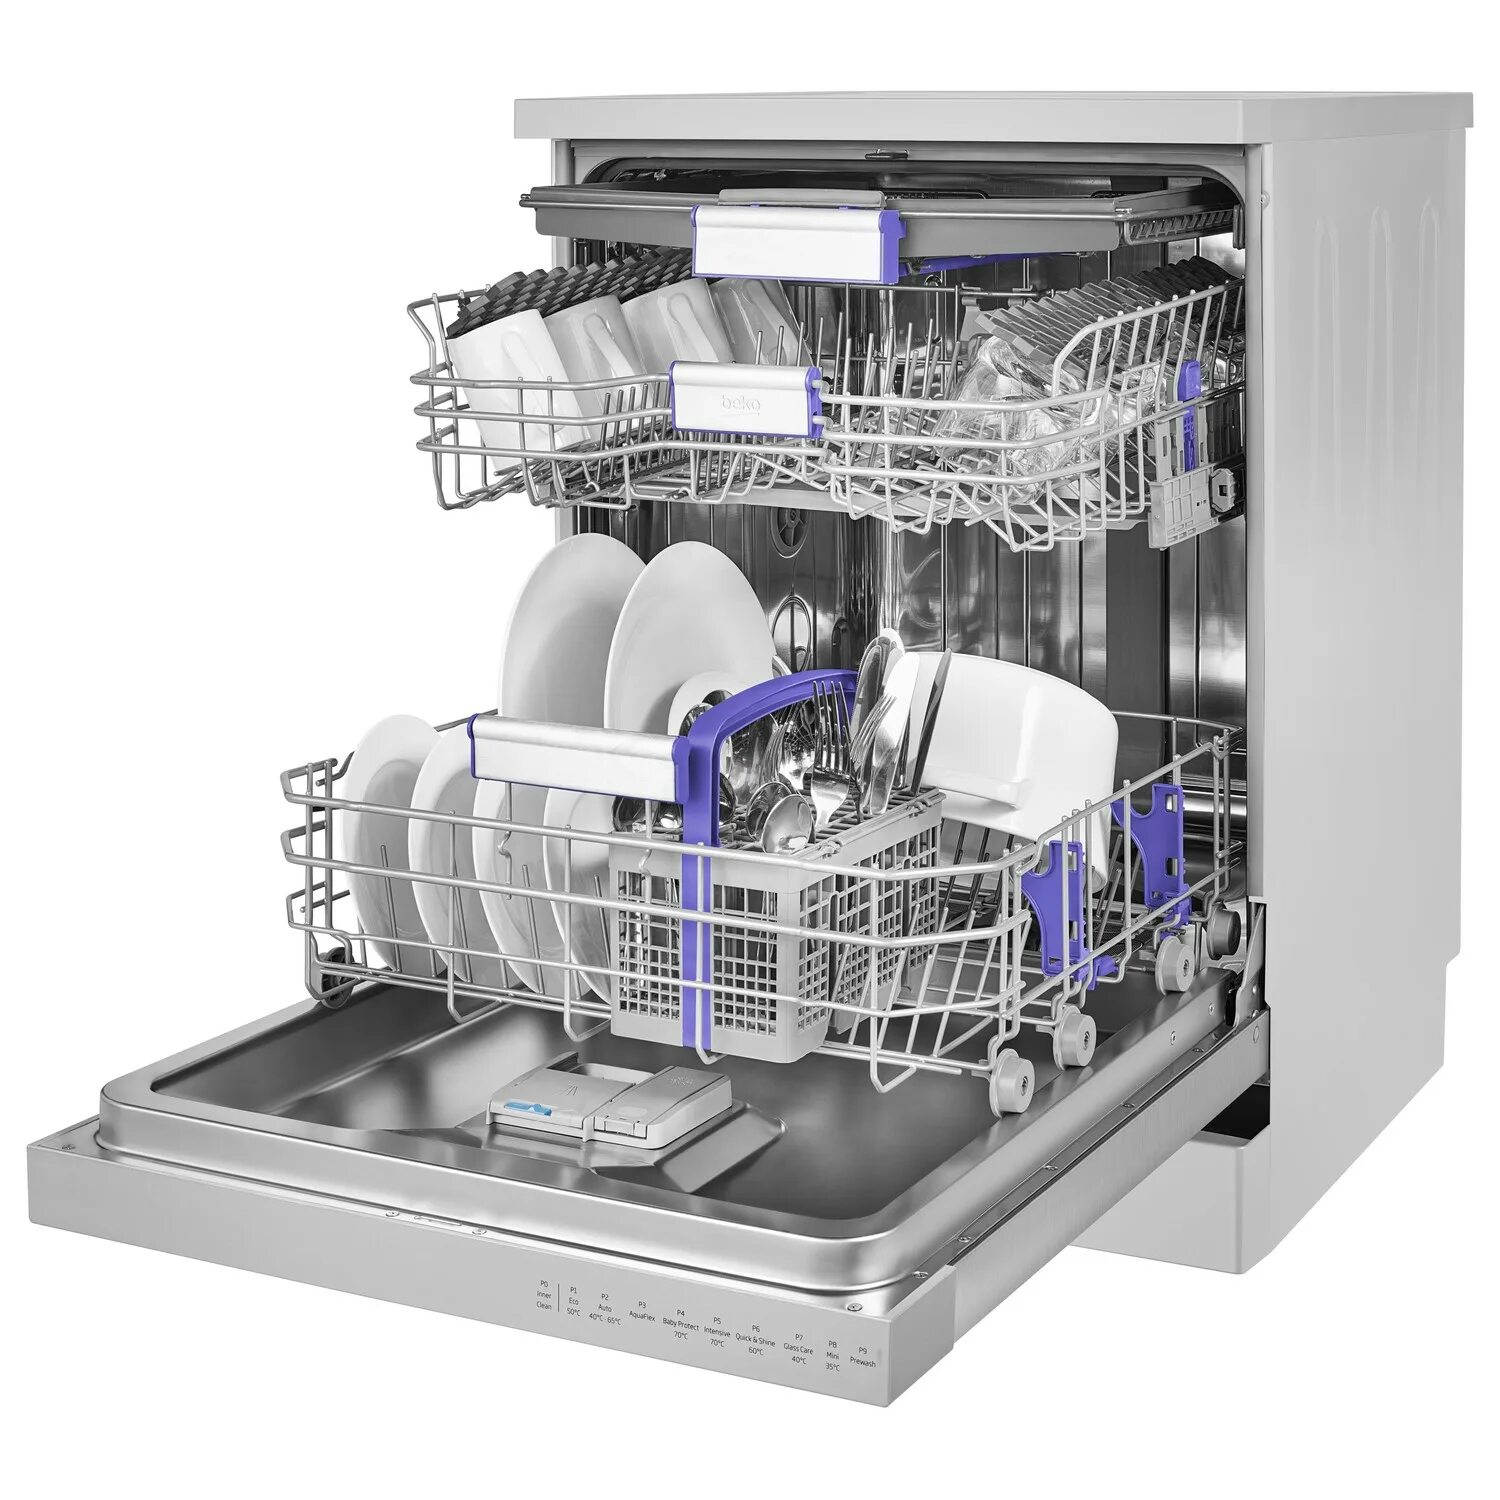 Посудомойка беко. Beko DFN 39530 X. Посудомоечная машина Baumatic bdf465w. Beko Dishwasher. DW Beko DFN 39530 X.